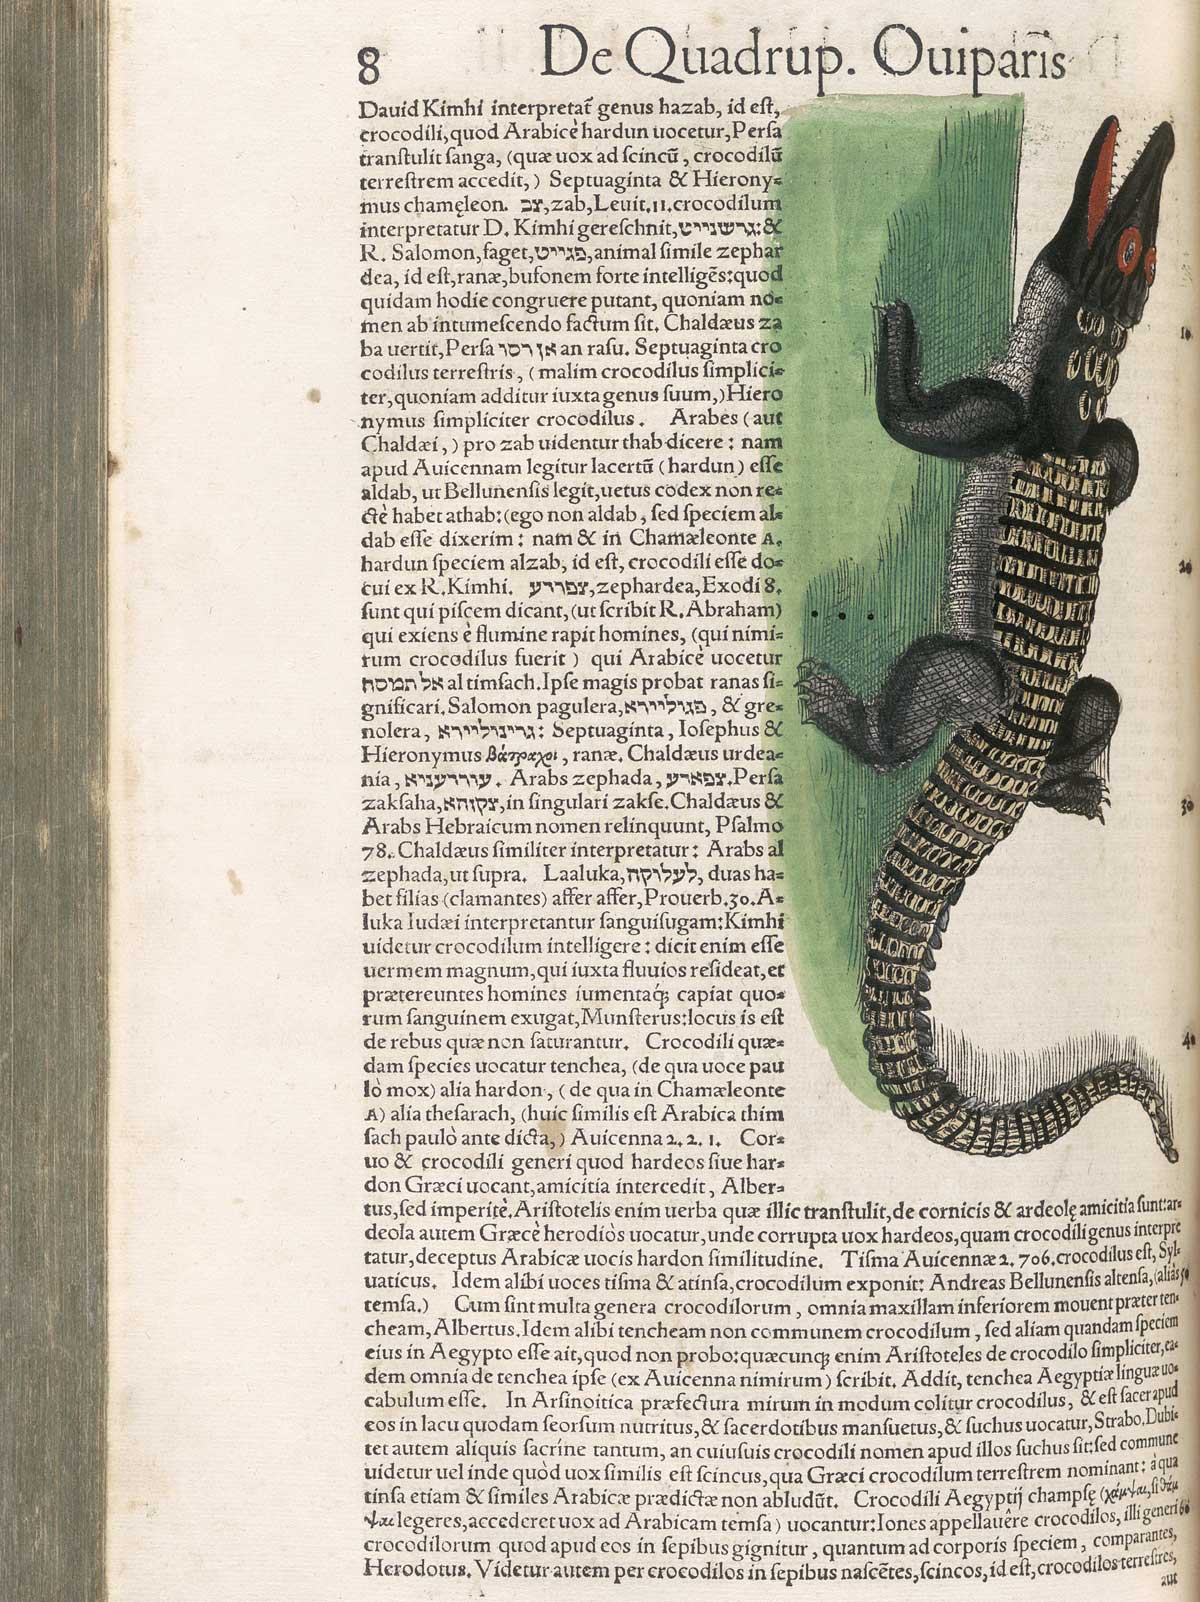 Page 8 from volume 2 of Conrad Gessner's Conradi Gesneri medici Tigurini Historiae animalium, featuring the colored woodcut of a crocodile.